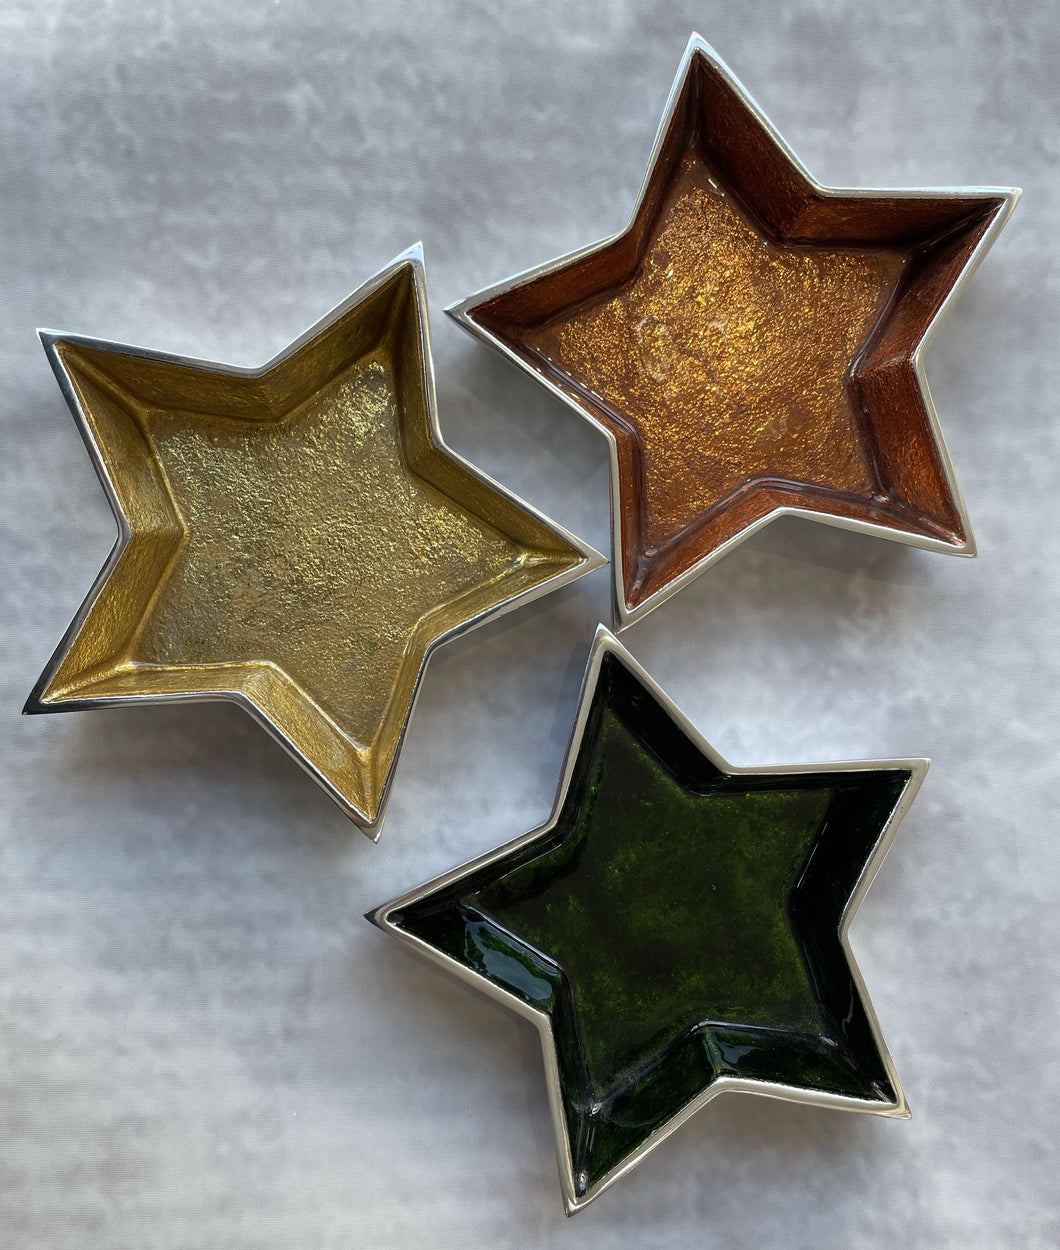 Foilet Aluminium Star Dish - 3 Colours